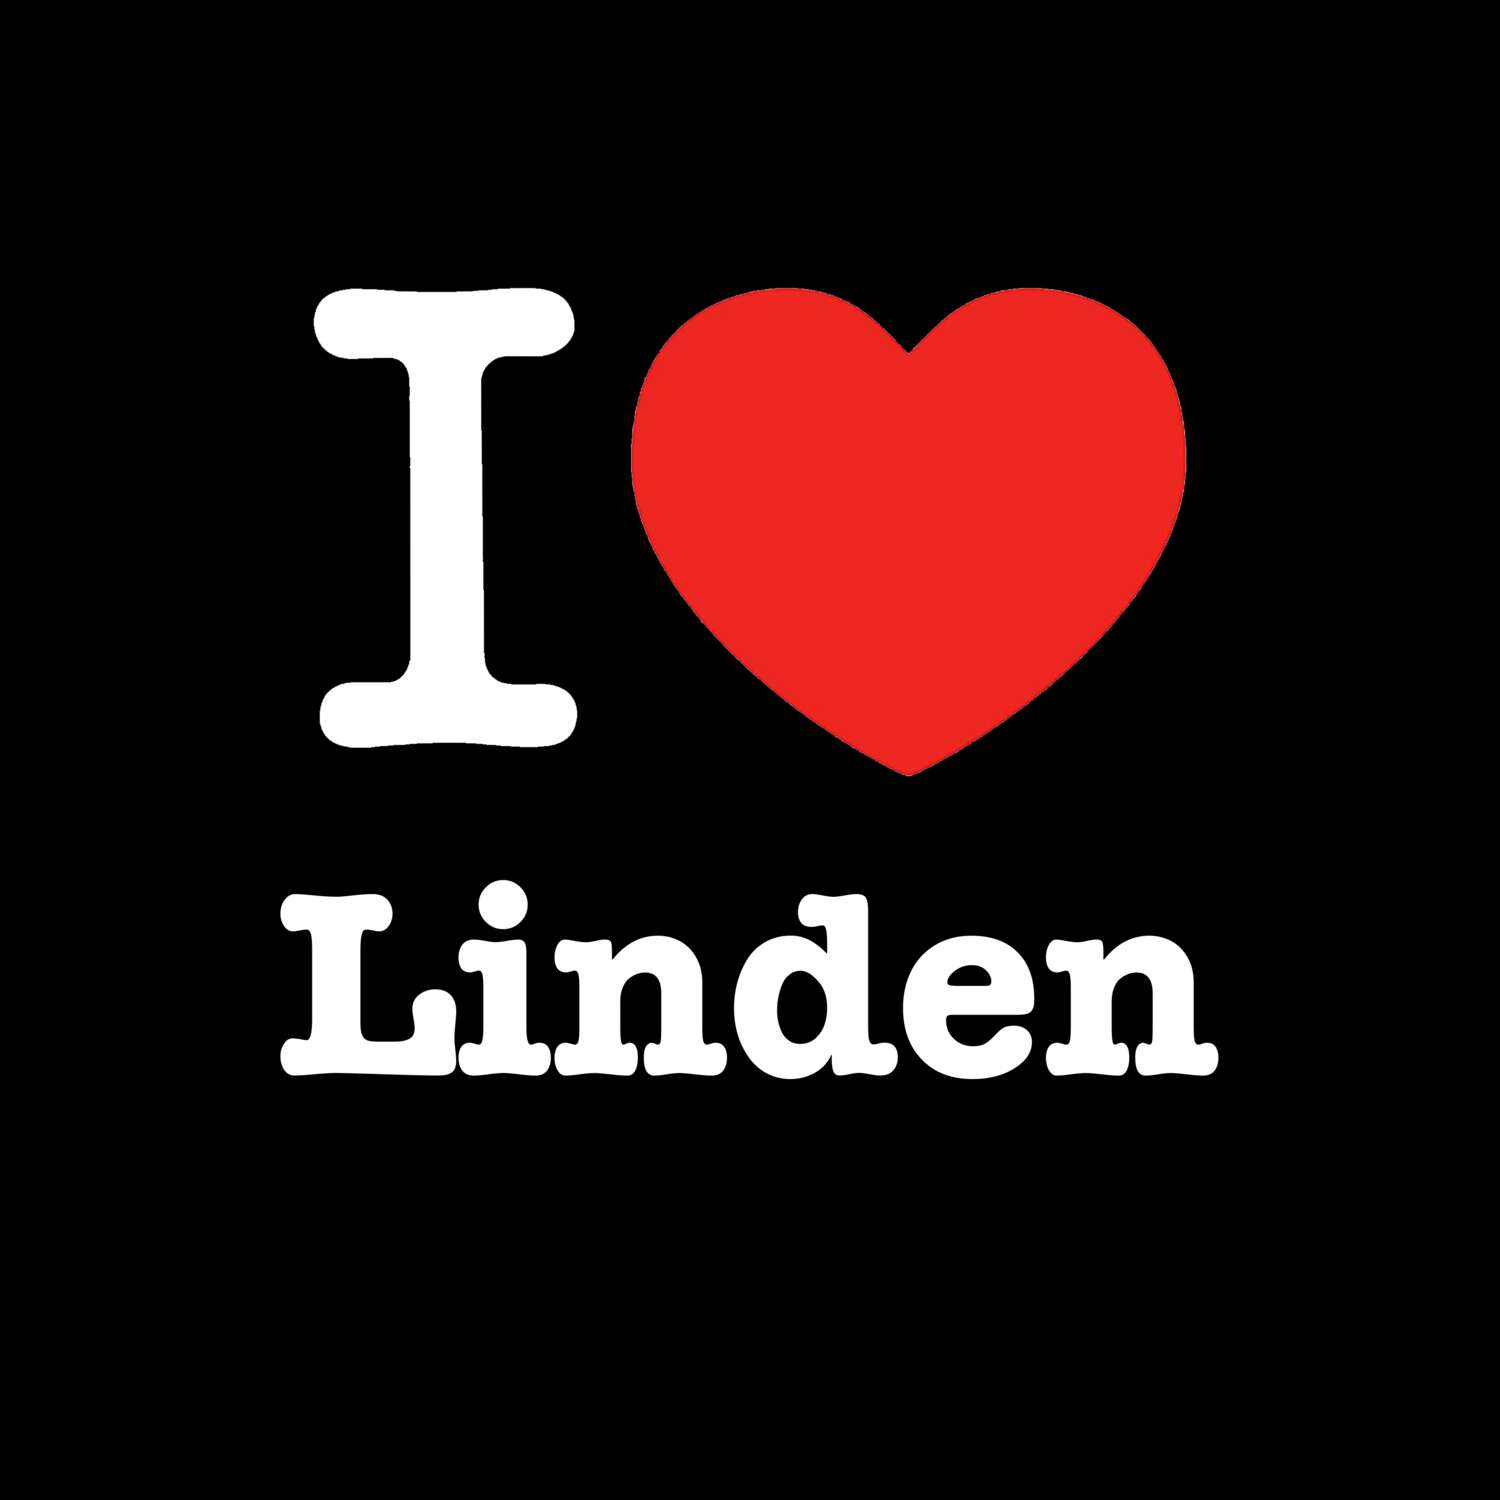 Linden T-Shirt »I love«